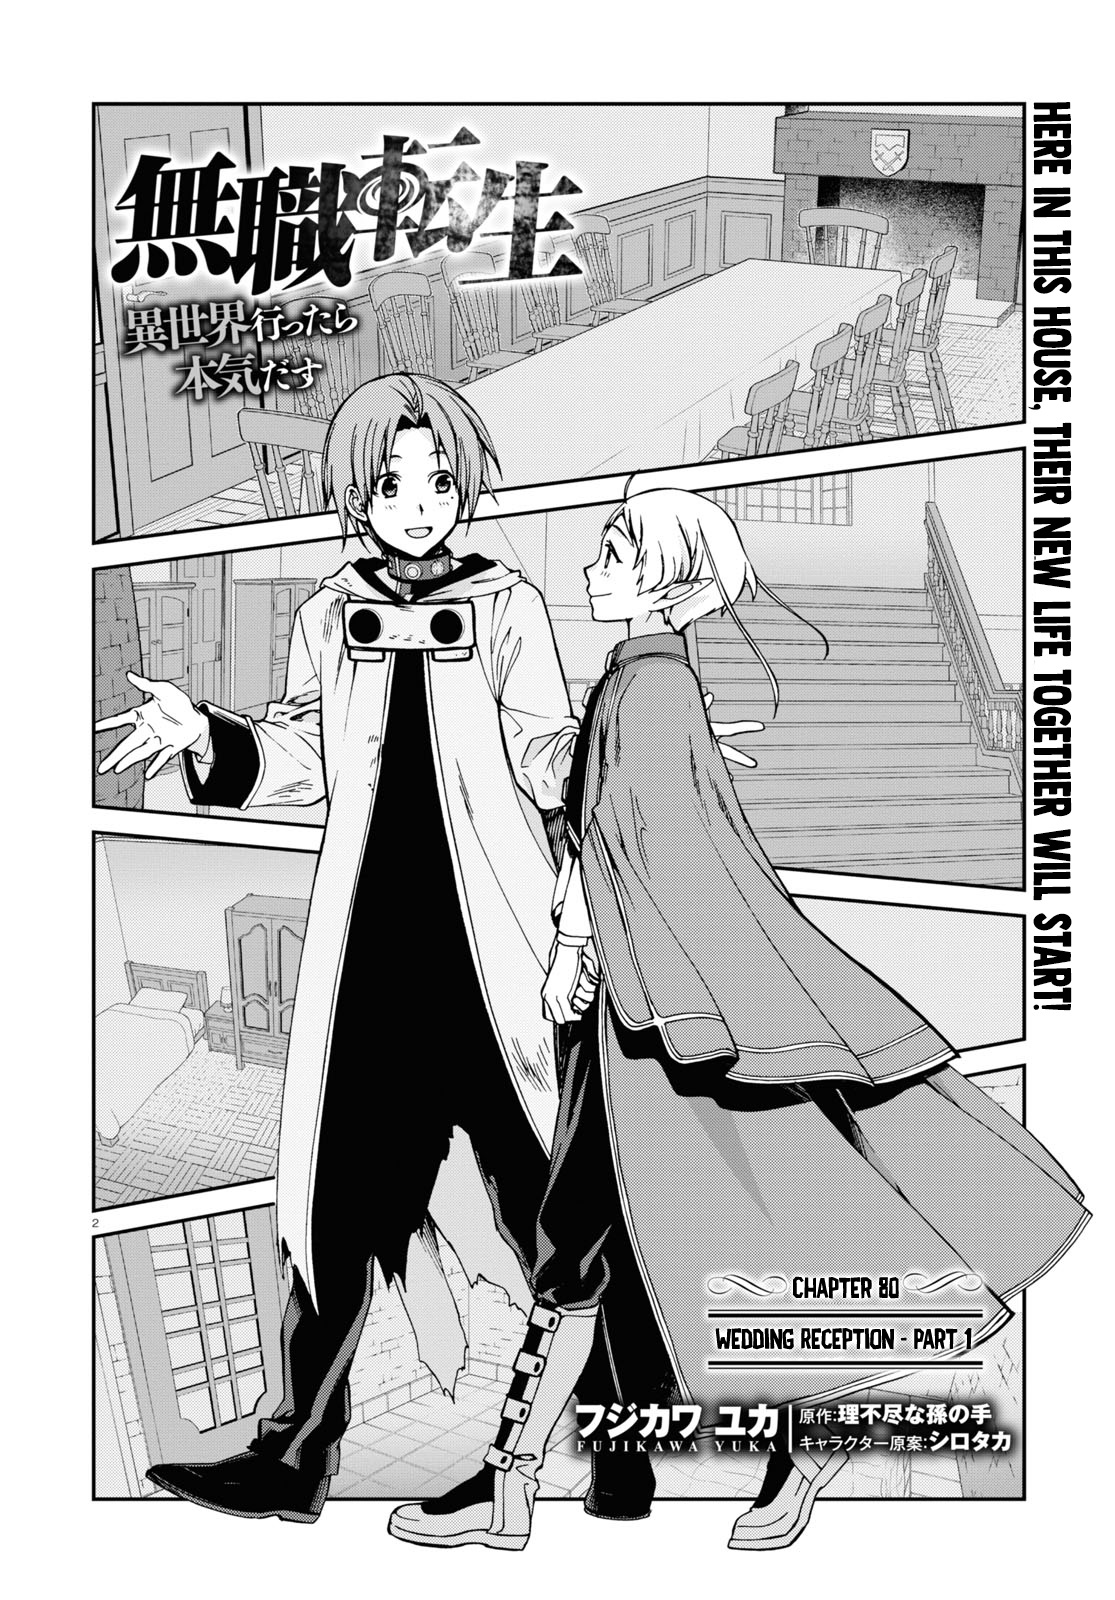 Mushoku Tensei Manga Online - All Chapters